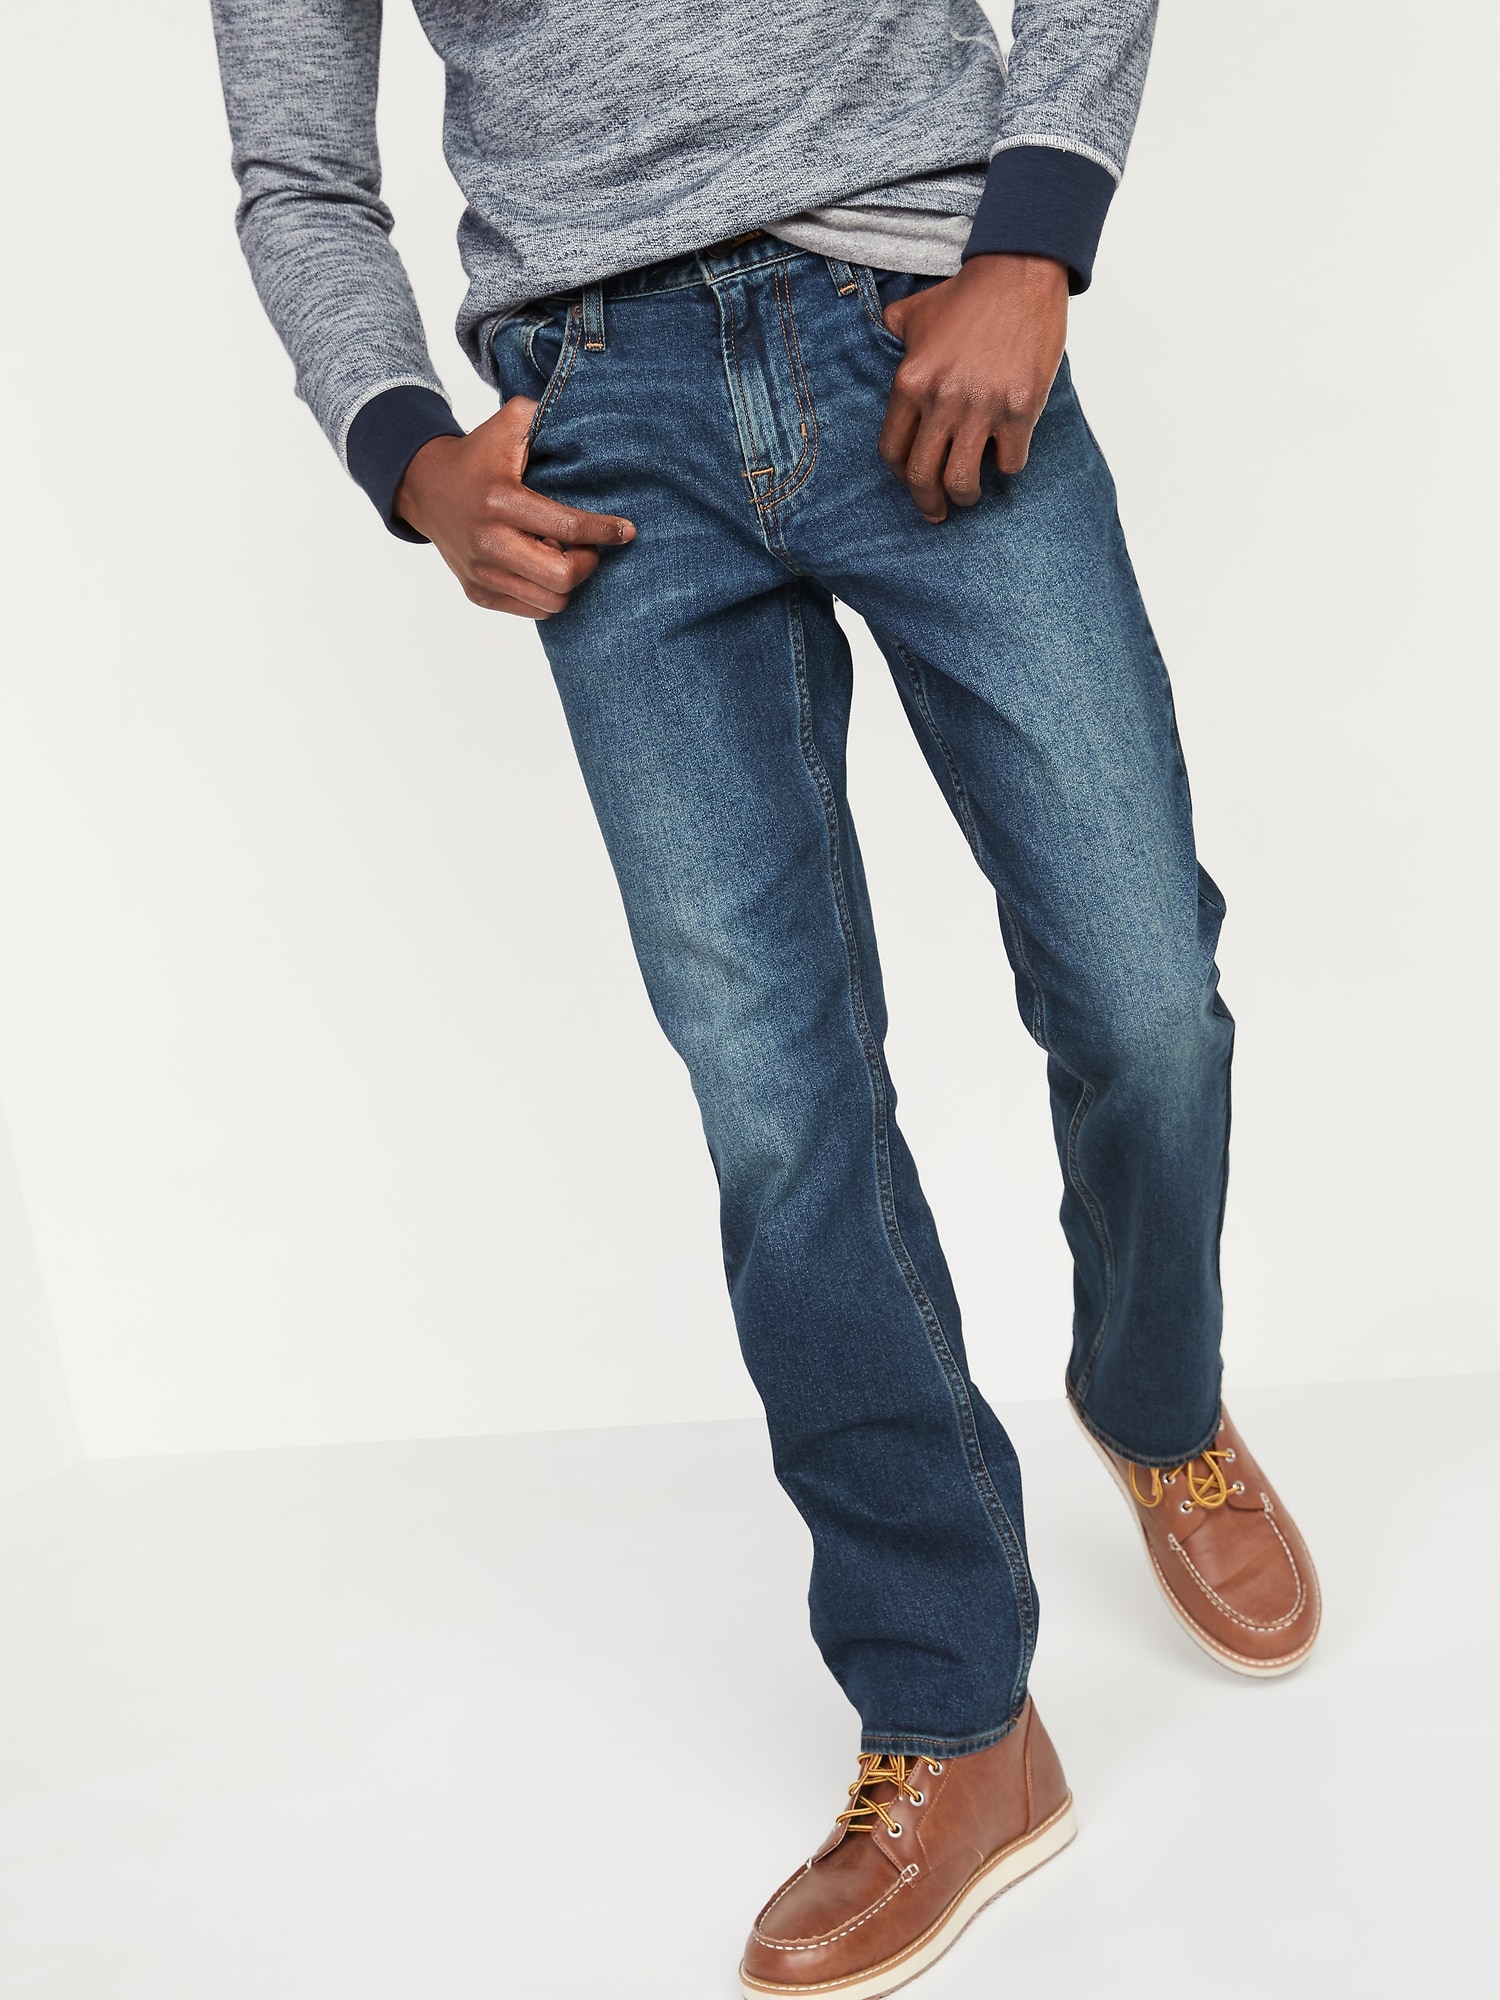 Boot-Cut Built-In Flex Jeans For Men | Old Navy